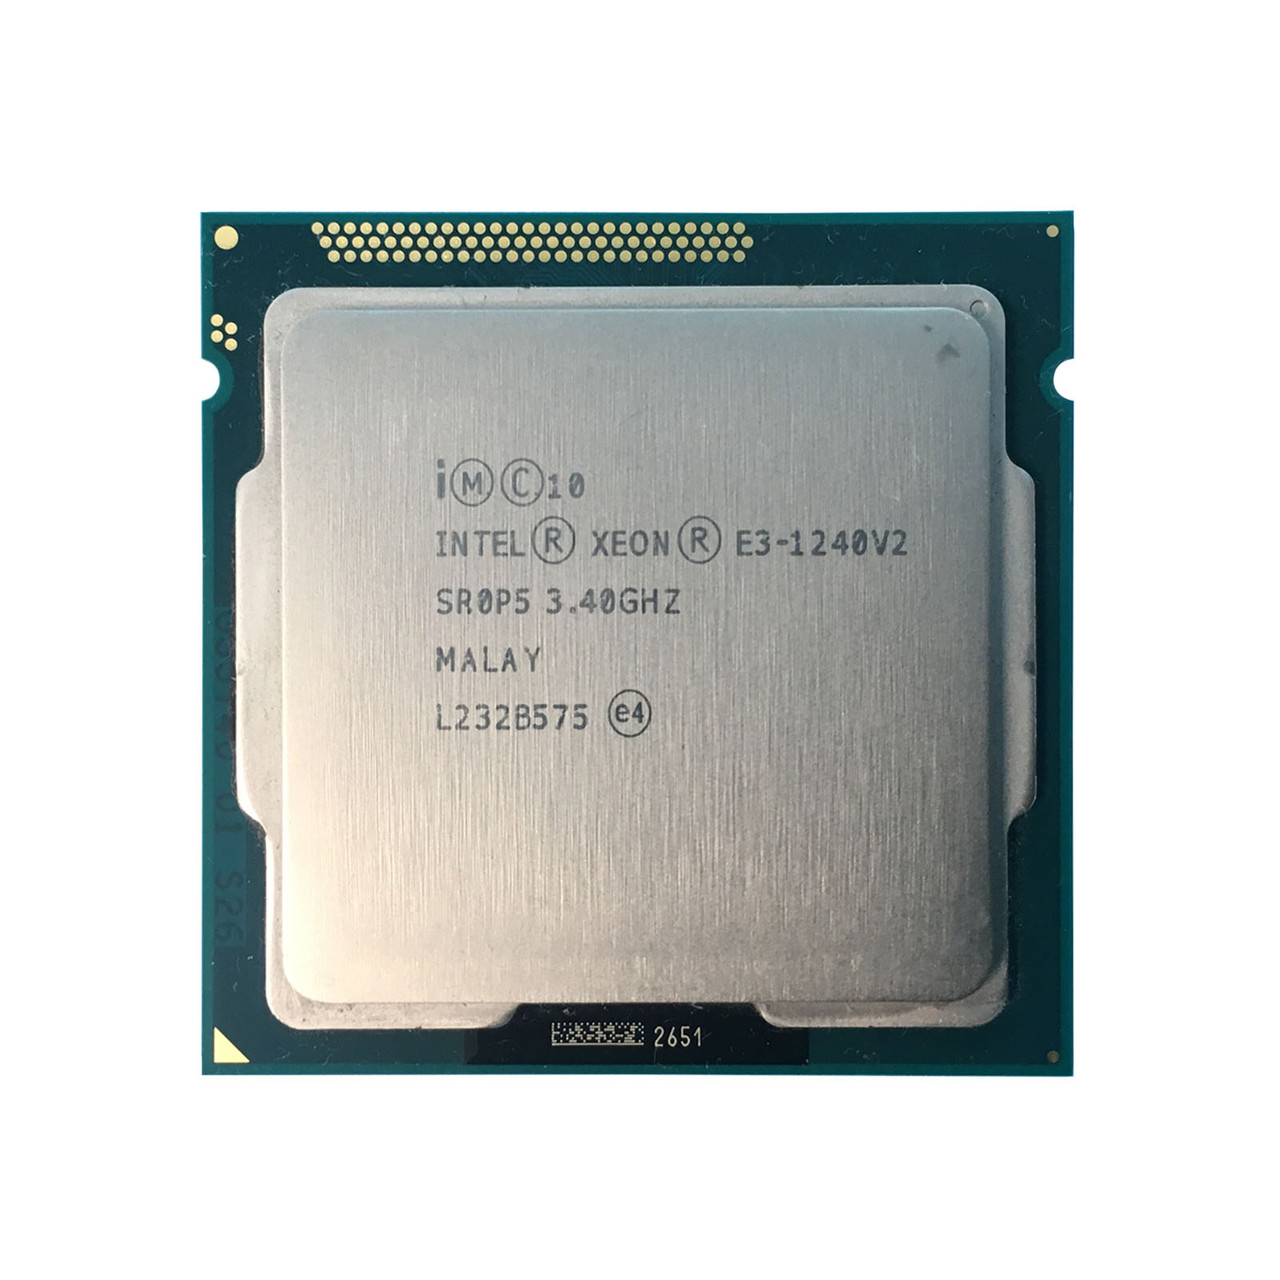 Dell W51M5 Xeon E3-1240 V2 QC 3.4Ghz 8MB 5GTs Processor